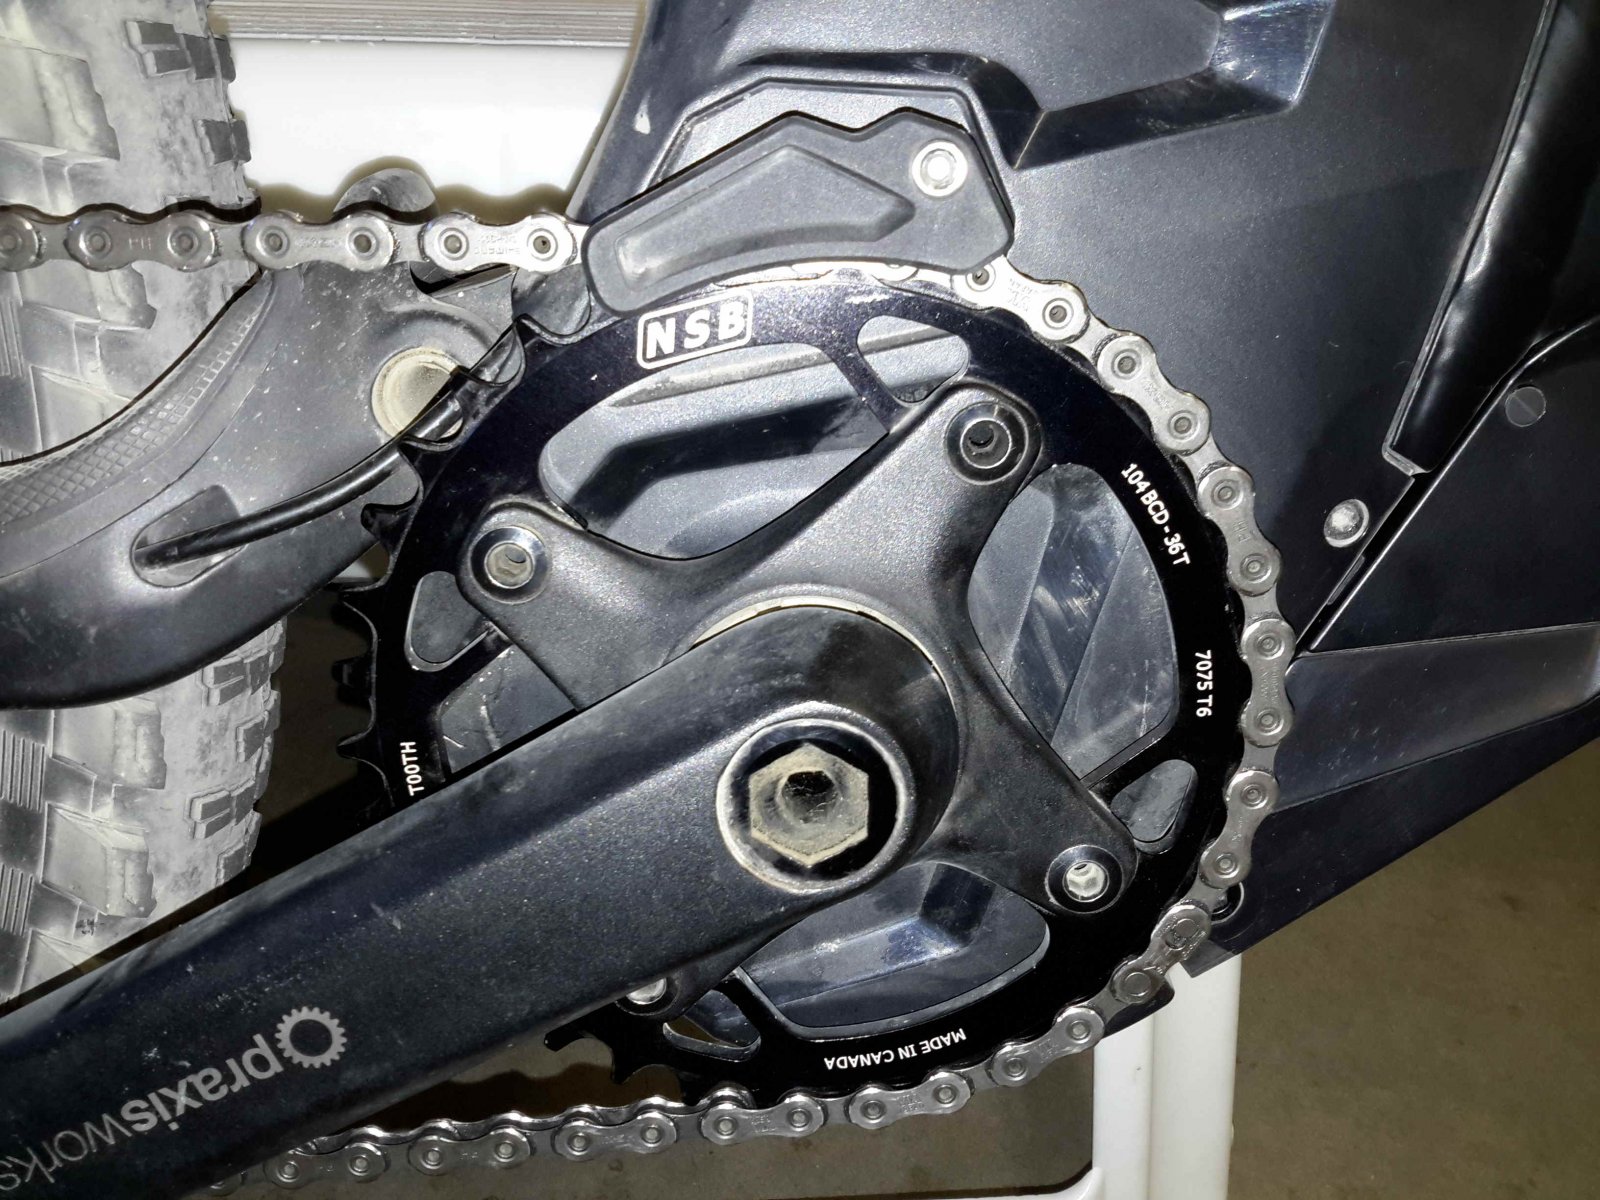 turbo levo crank removal